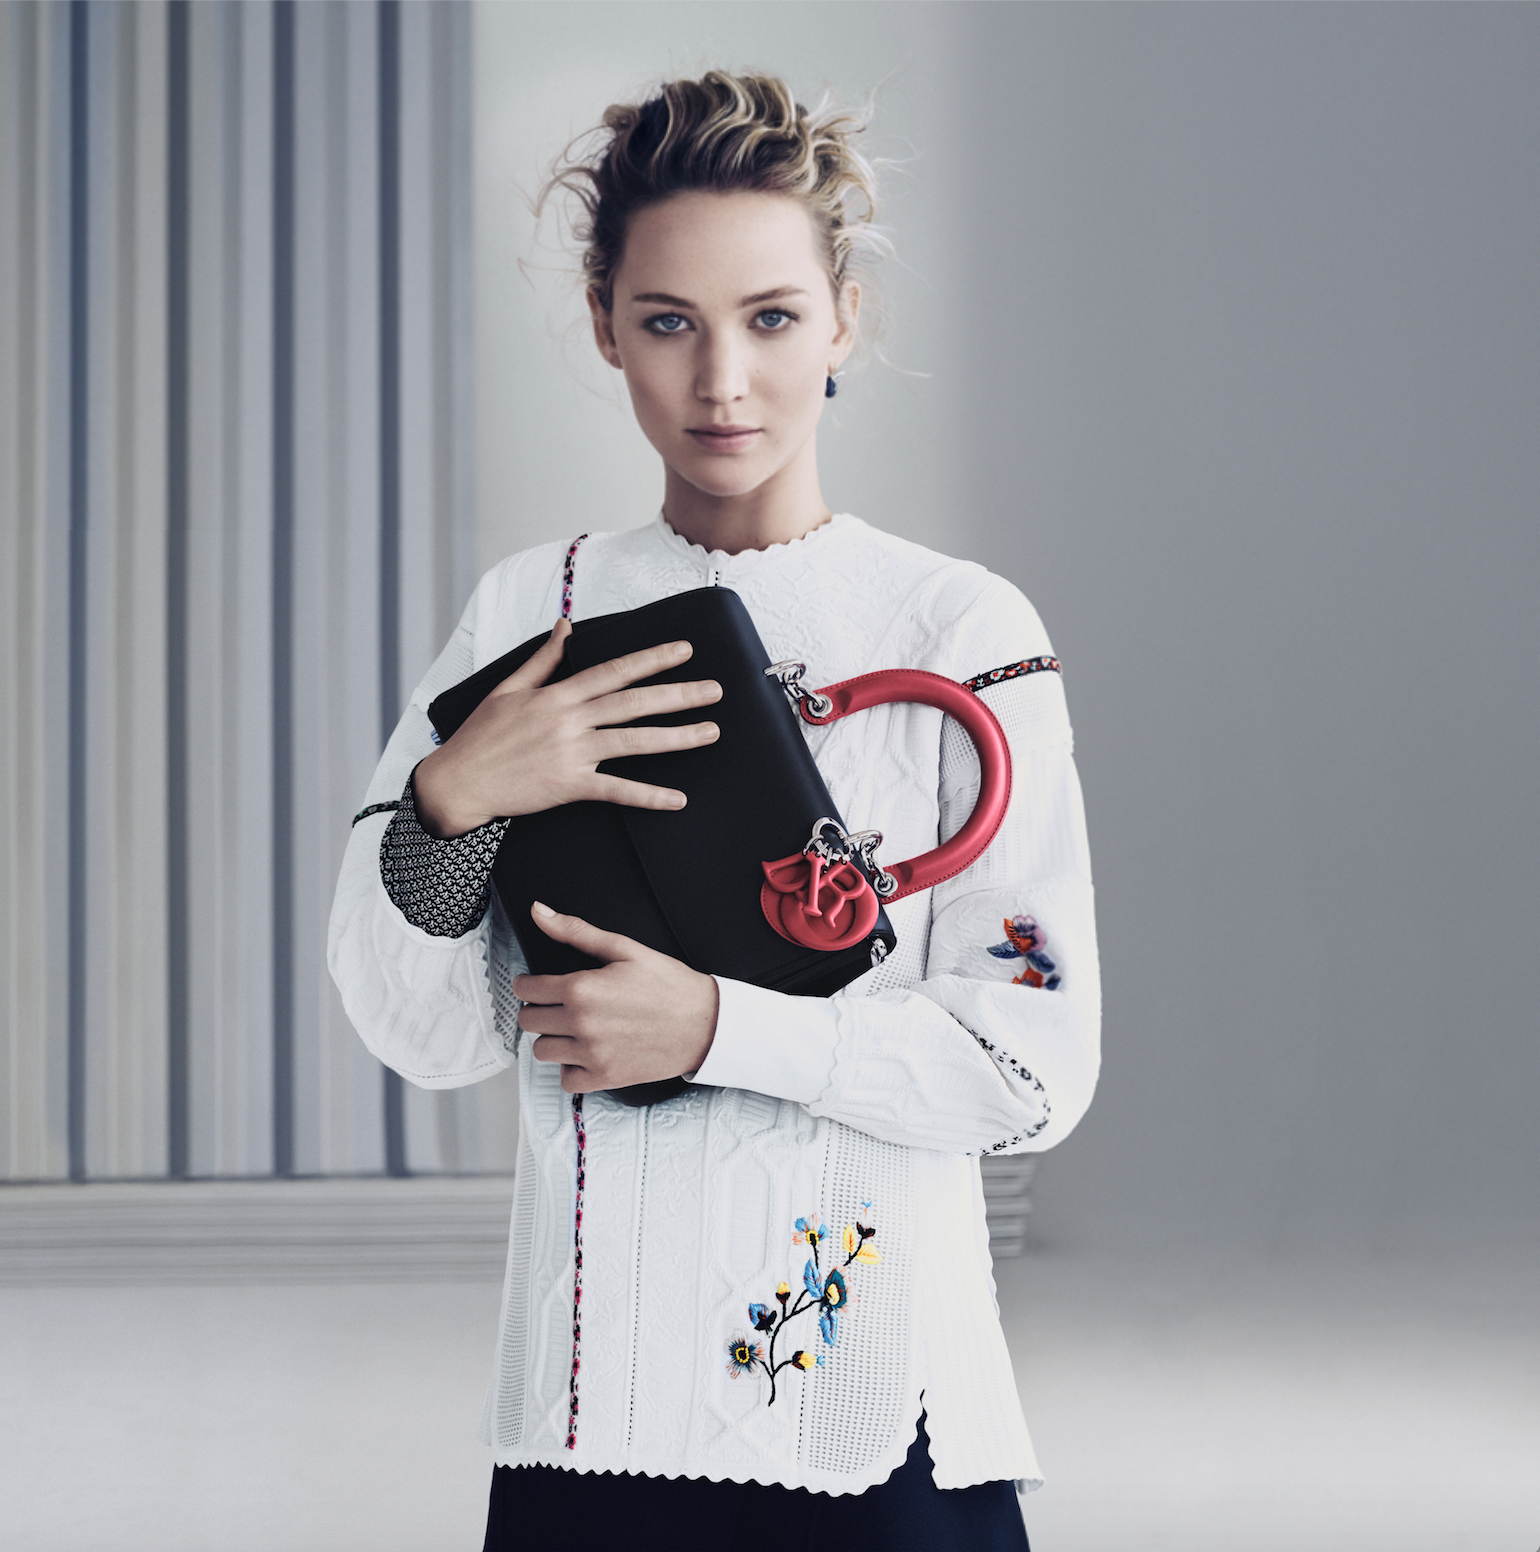 Jennifer Lawrence Stars in Dior's "Be Dior" Campaign